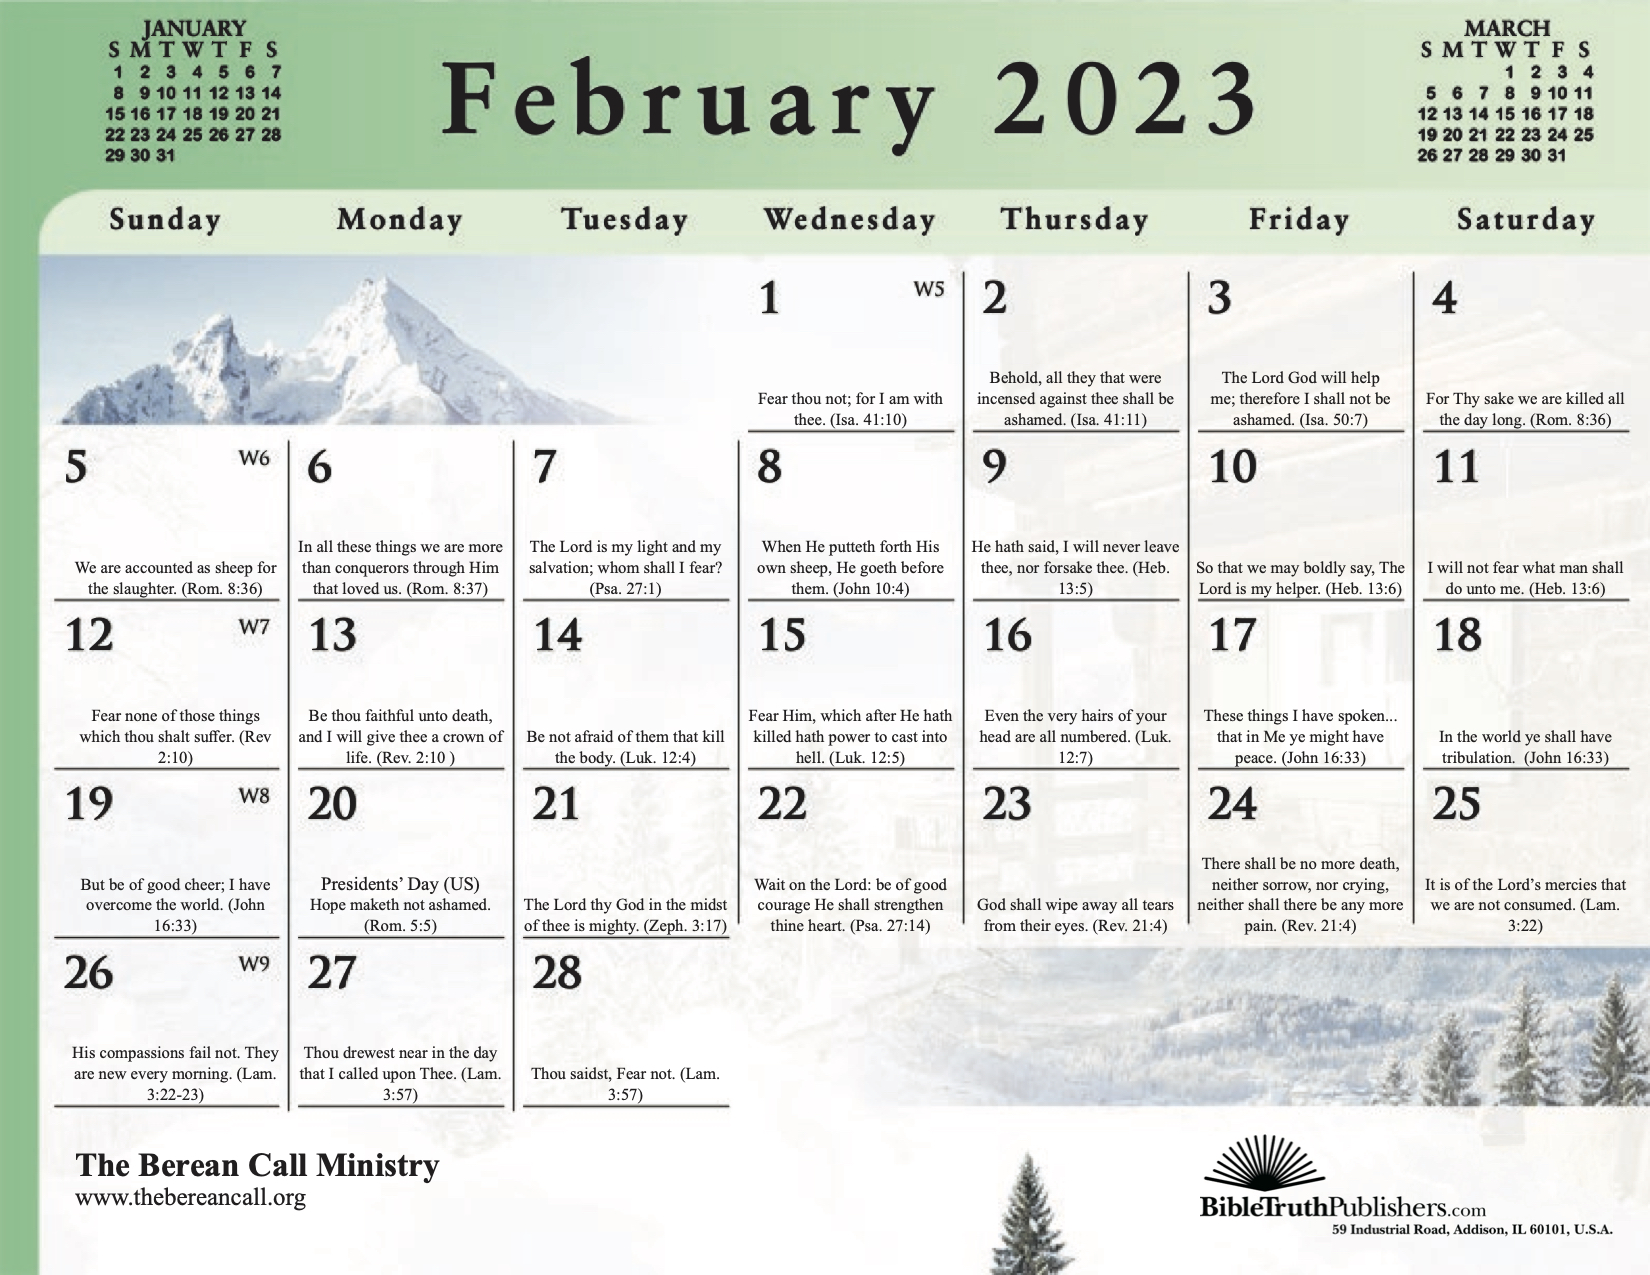 2023 Gospel of Peace Calendar *DAILY + MONTHLY VERSES*